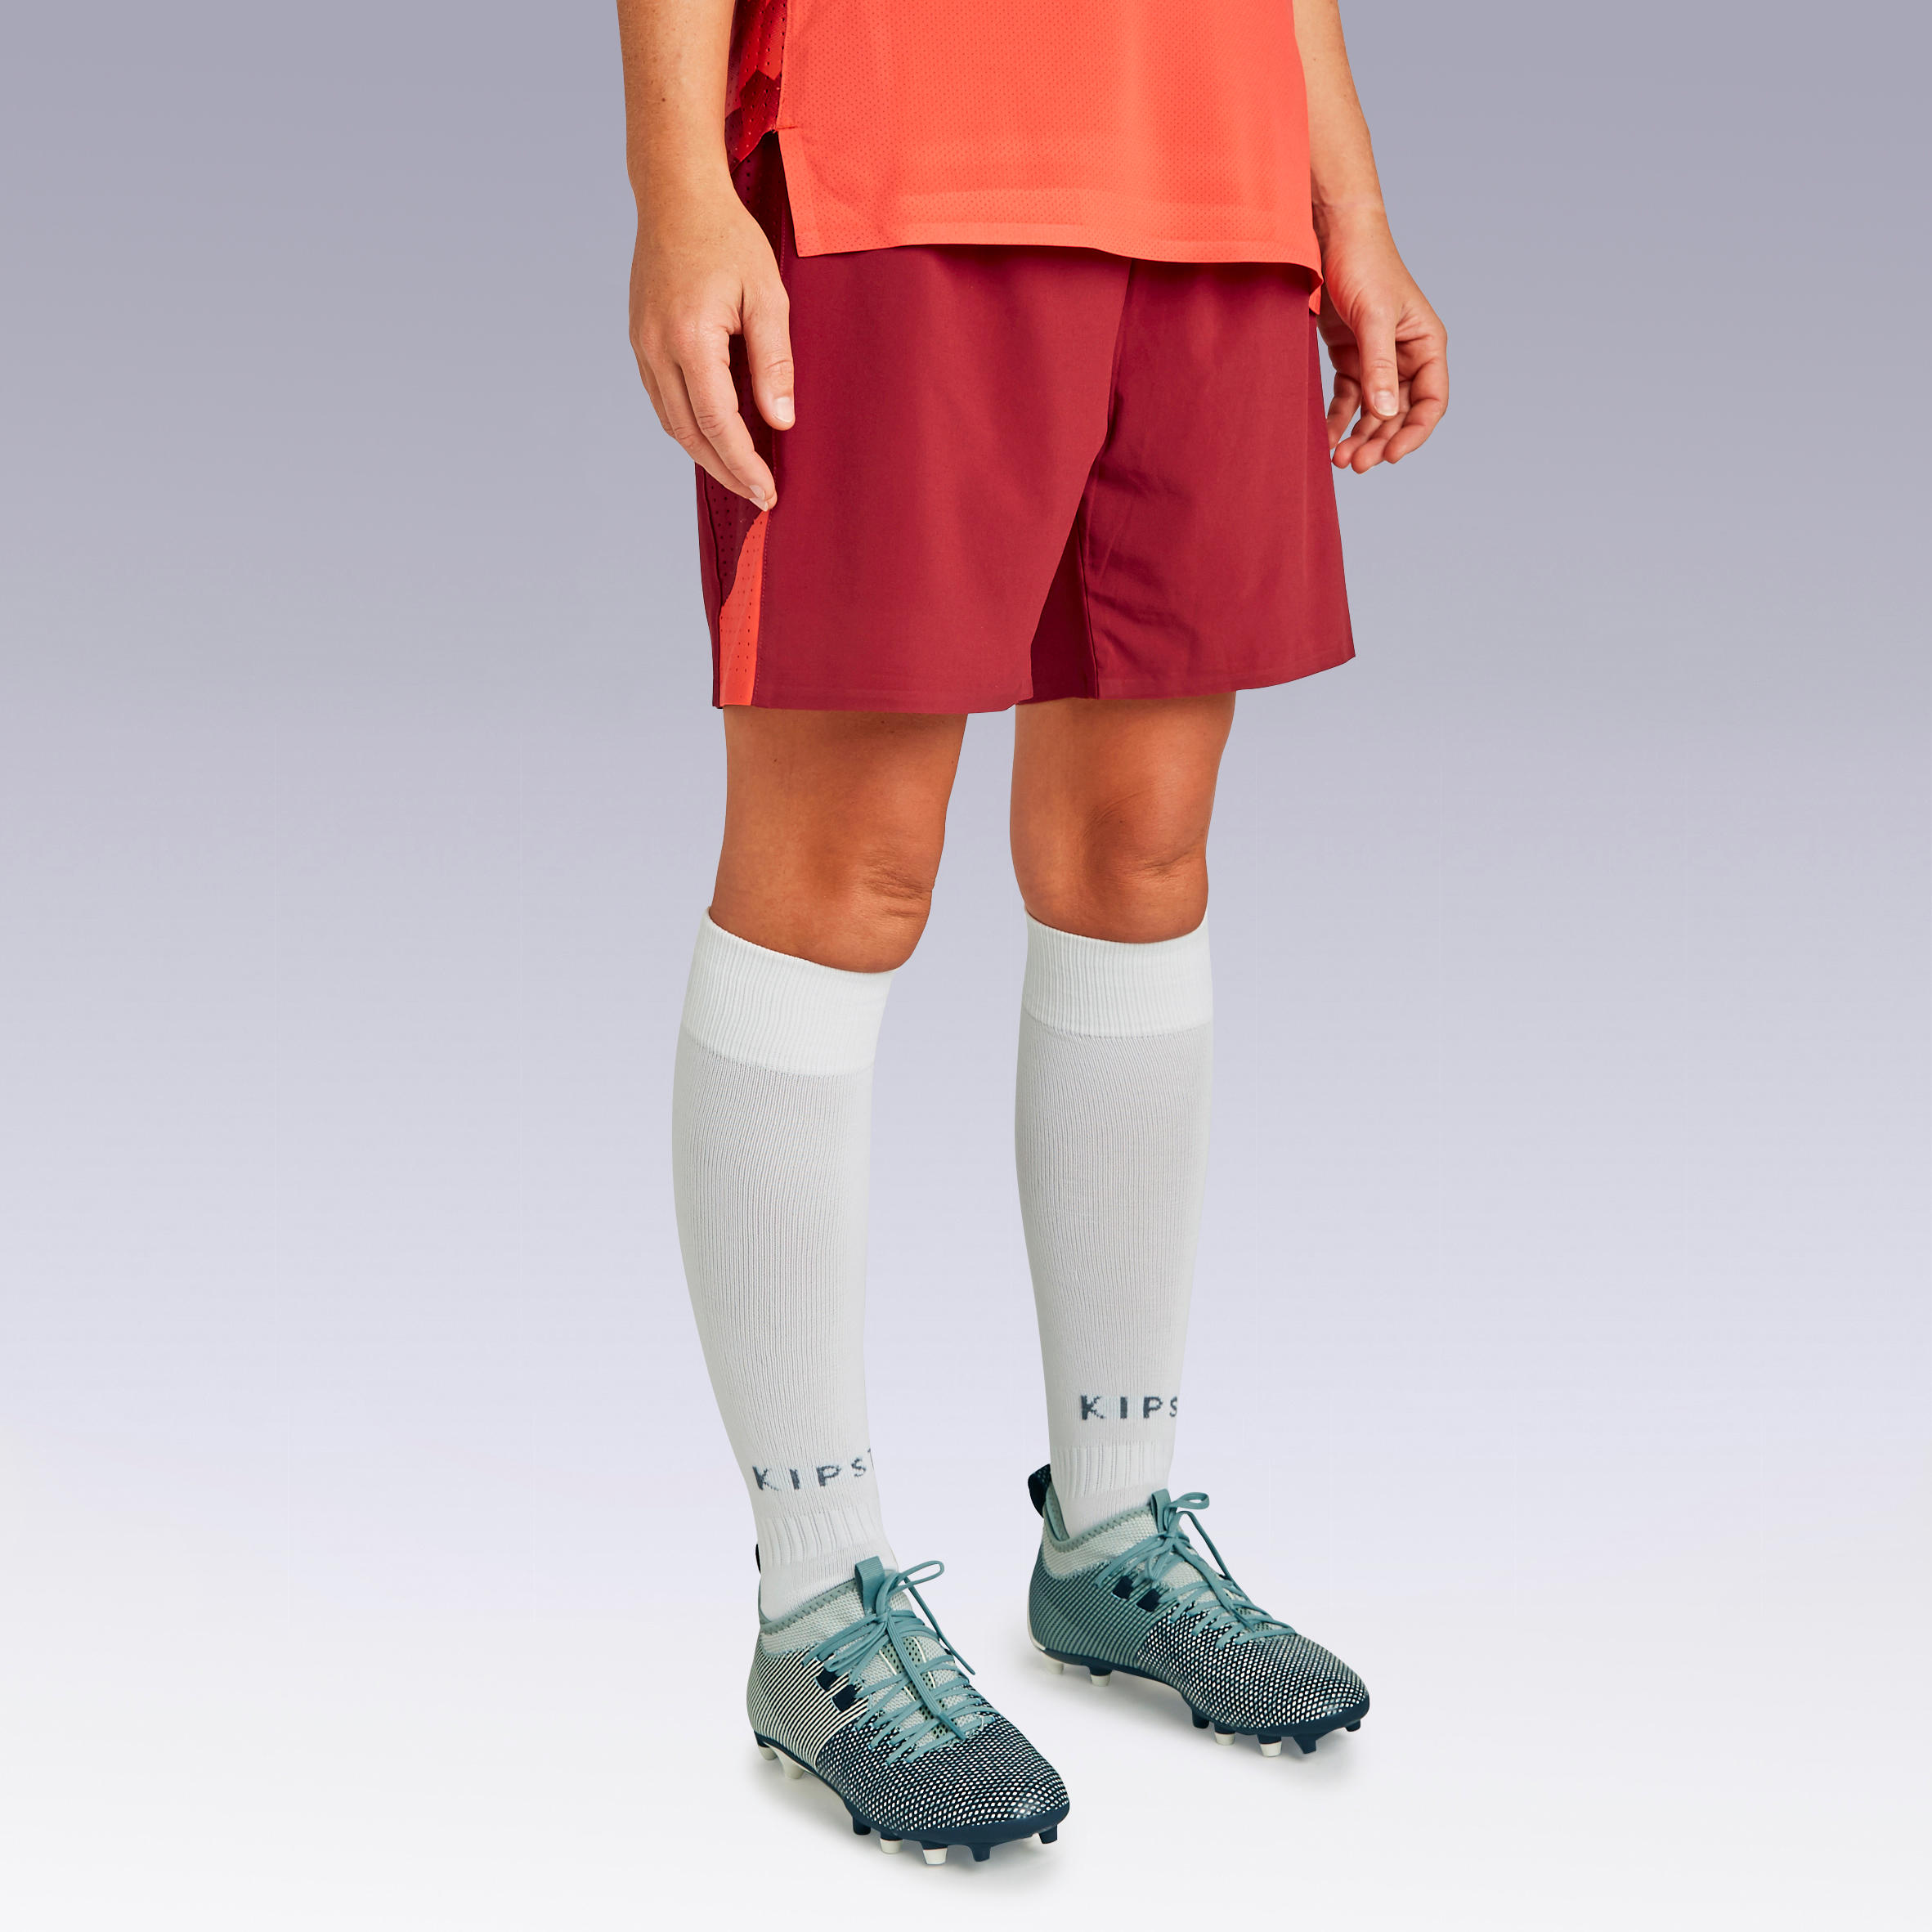 Women's Football Shorts F900 - Red/Burgundy 2/10